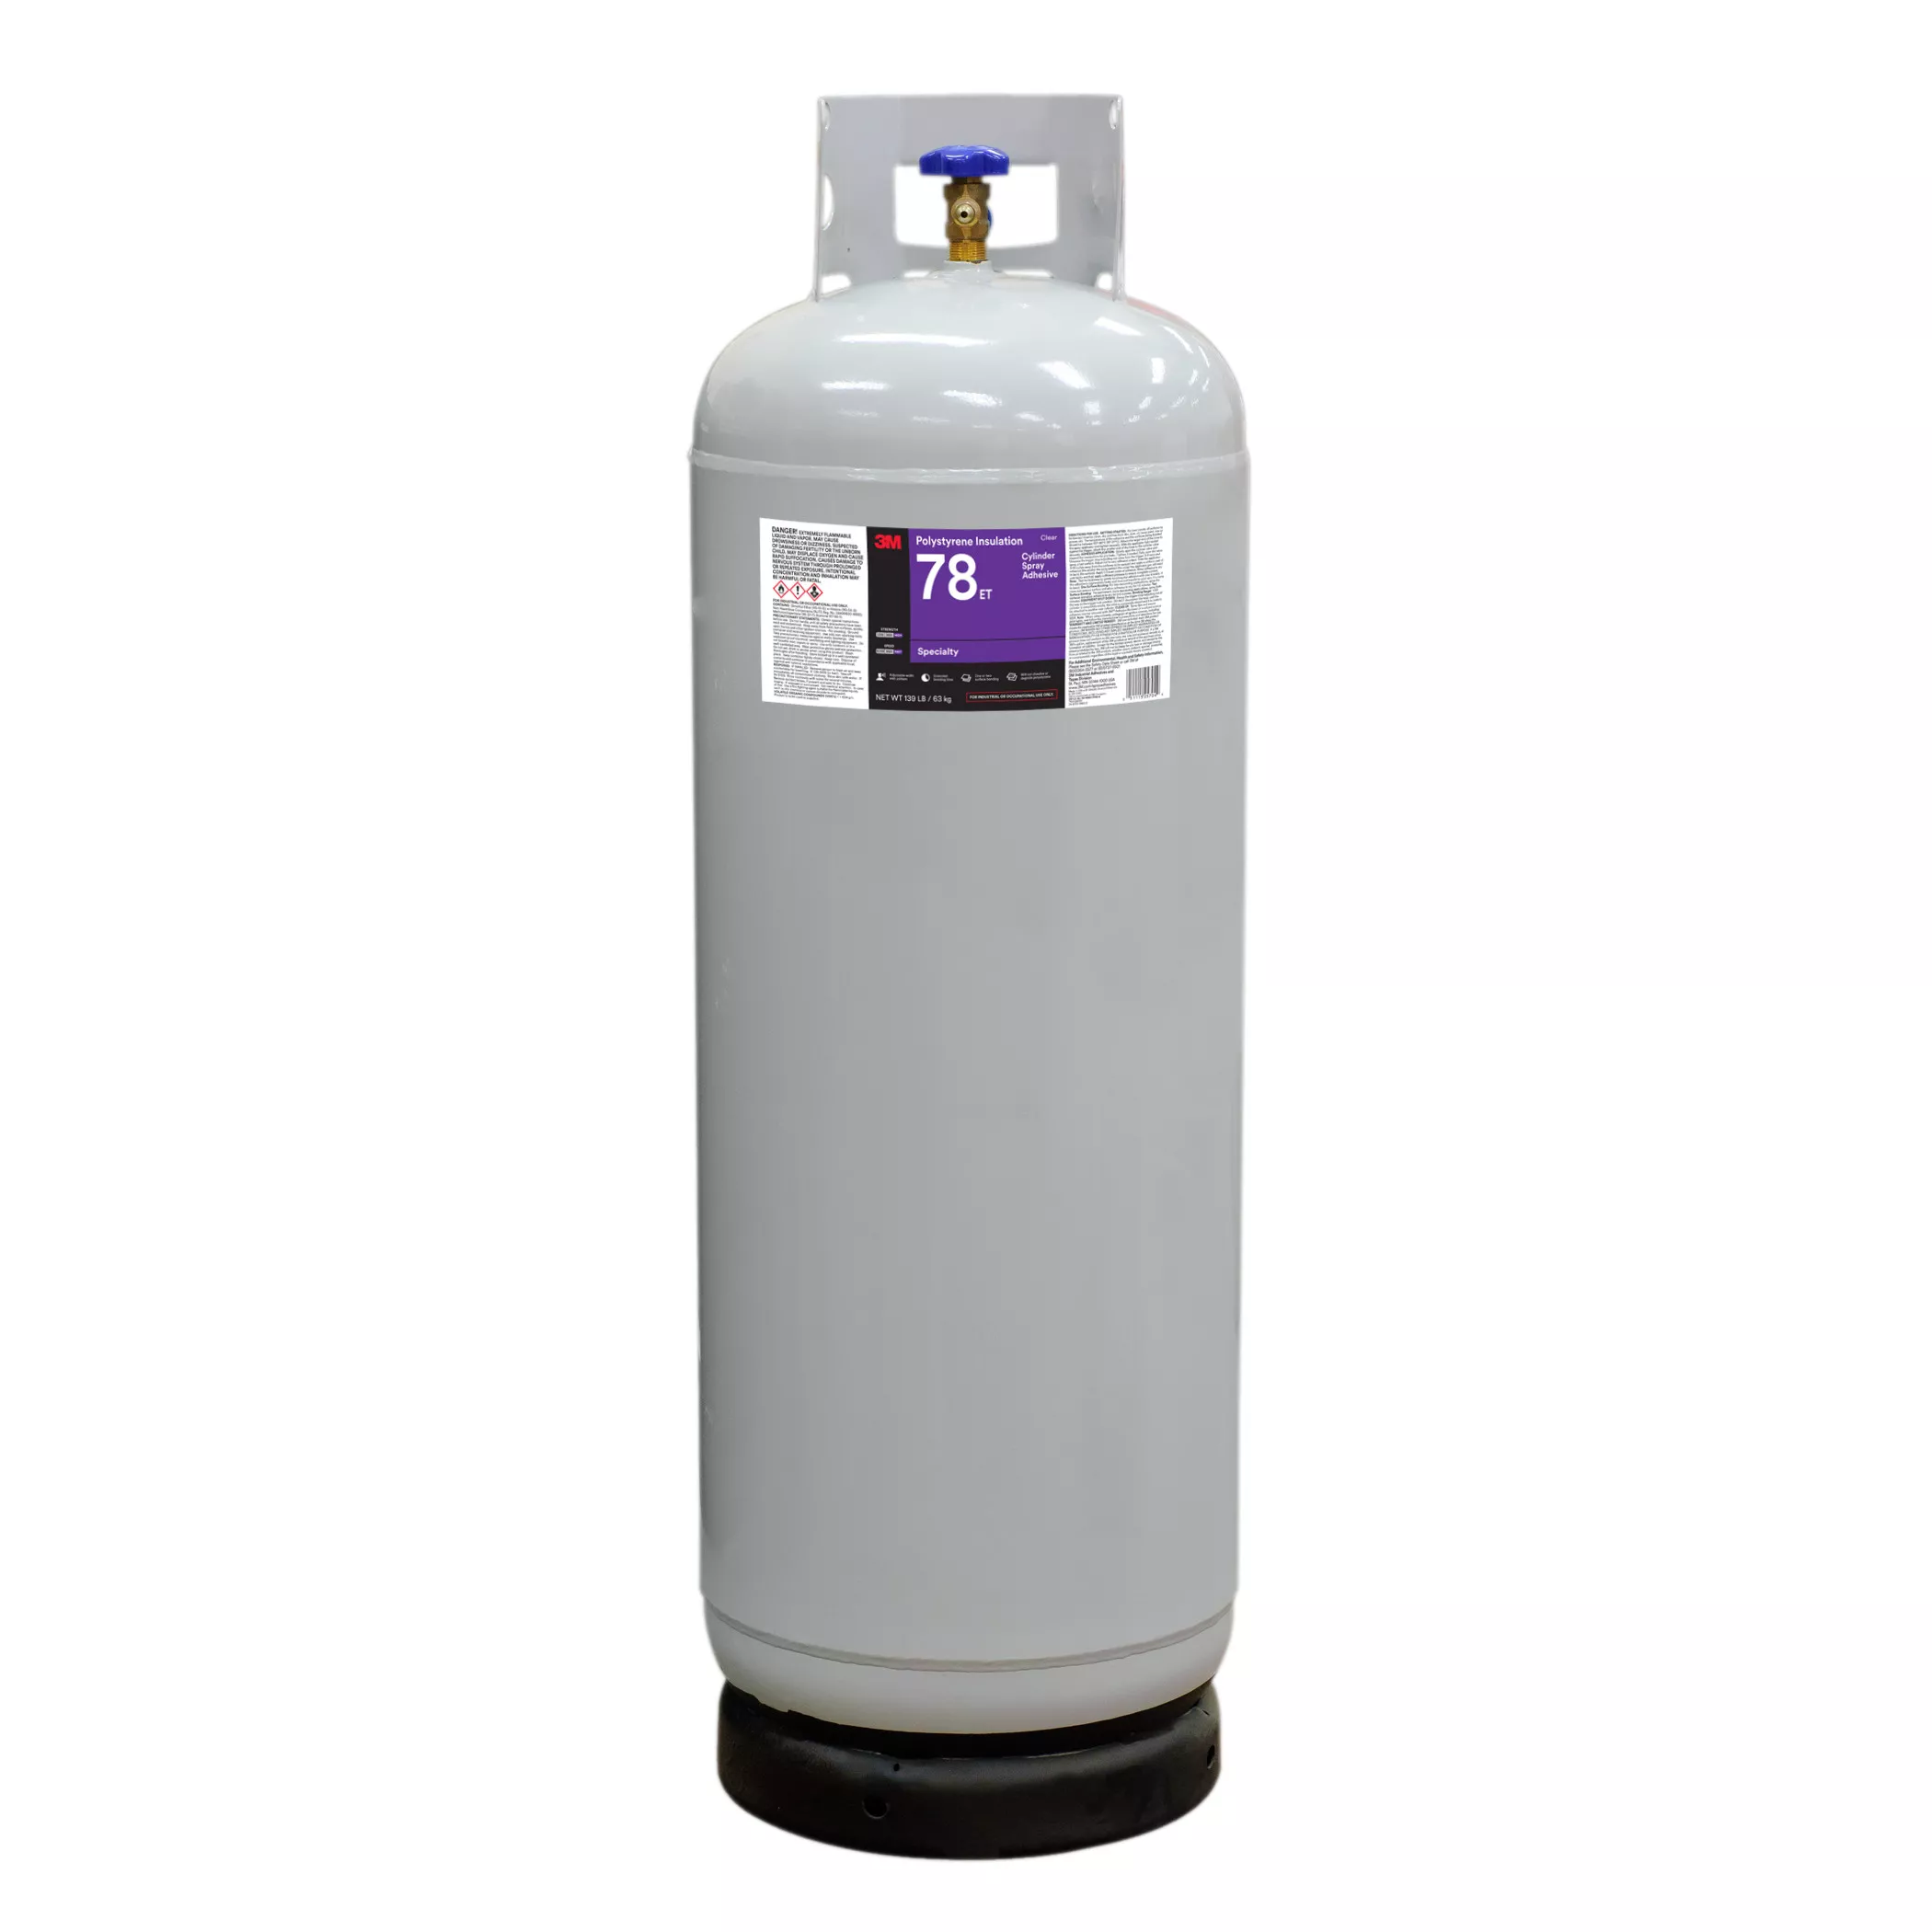 3M™ Polystyrene Insulation 78 ET Cylinder Spray Adhesive, Clear,
Intermediate Cylinder (Net Wt 139 lb)